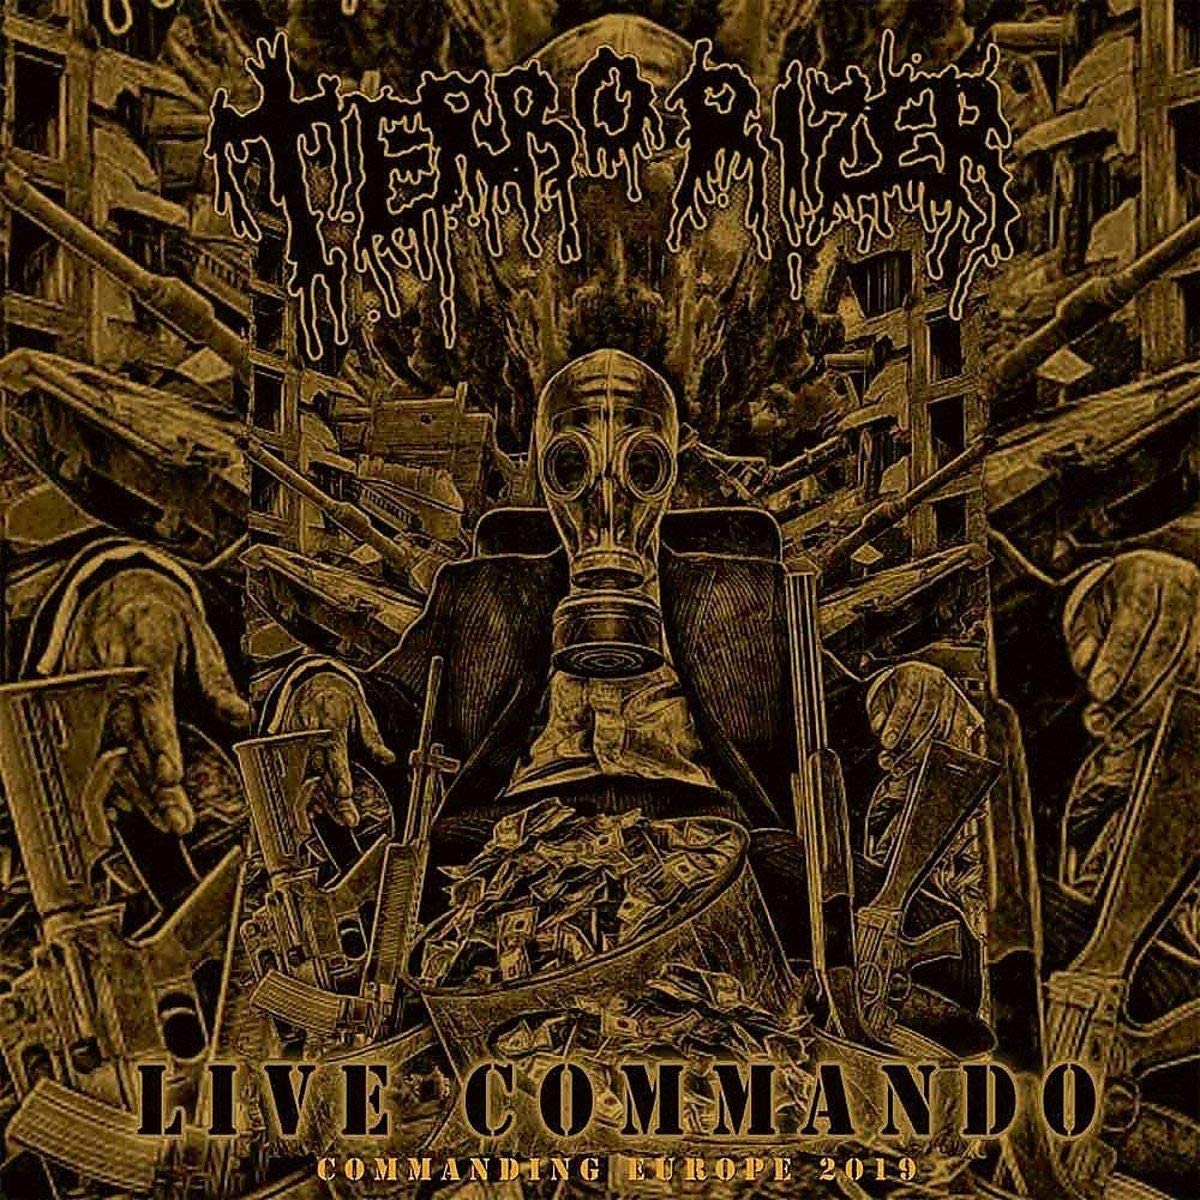 Terrorizer - Live Commando/Commanding Europe 2019 - LP